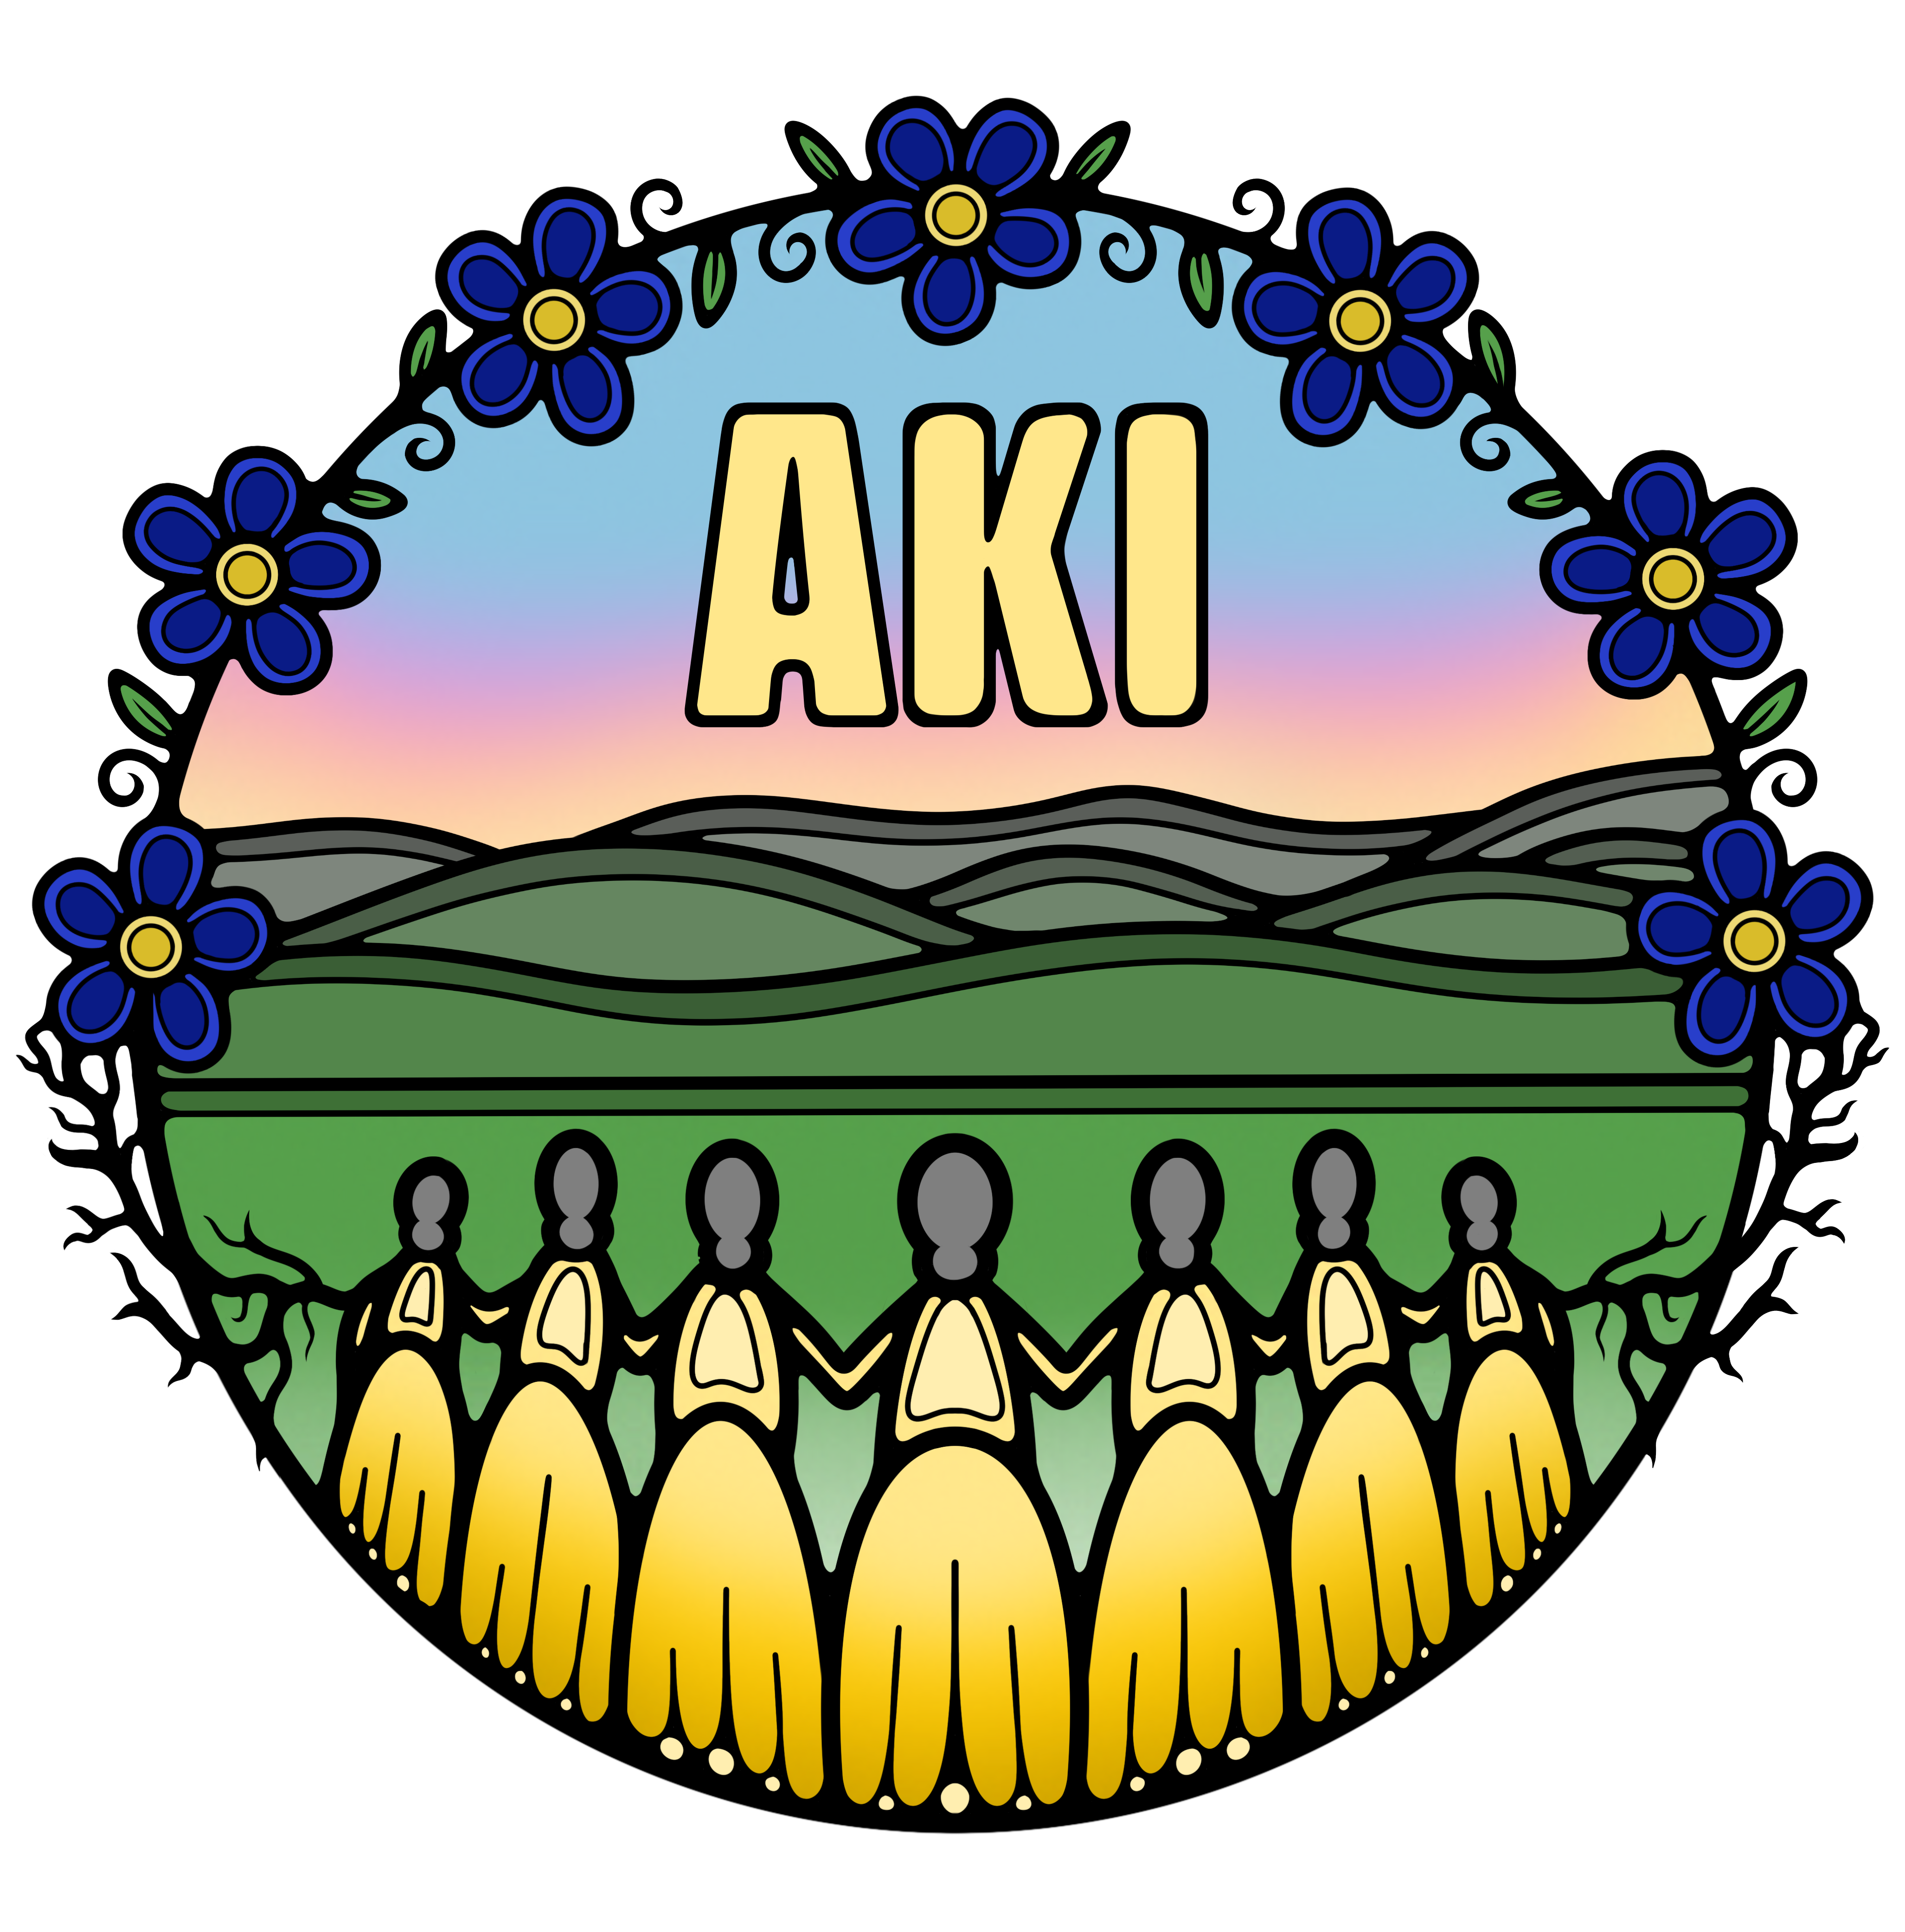 Aki logo